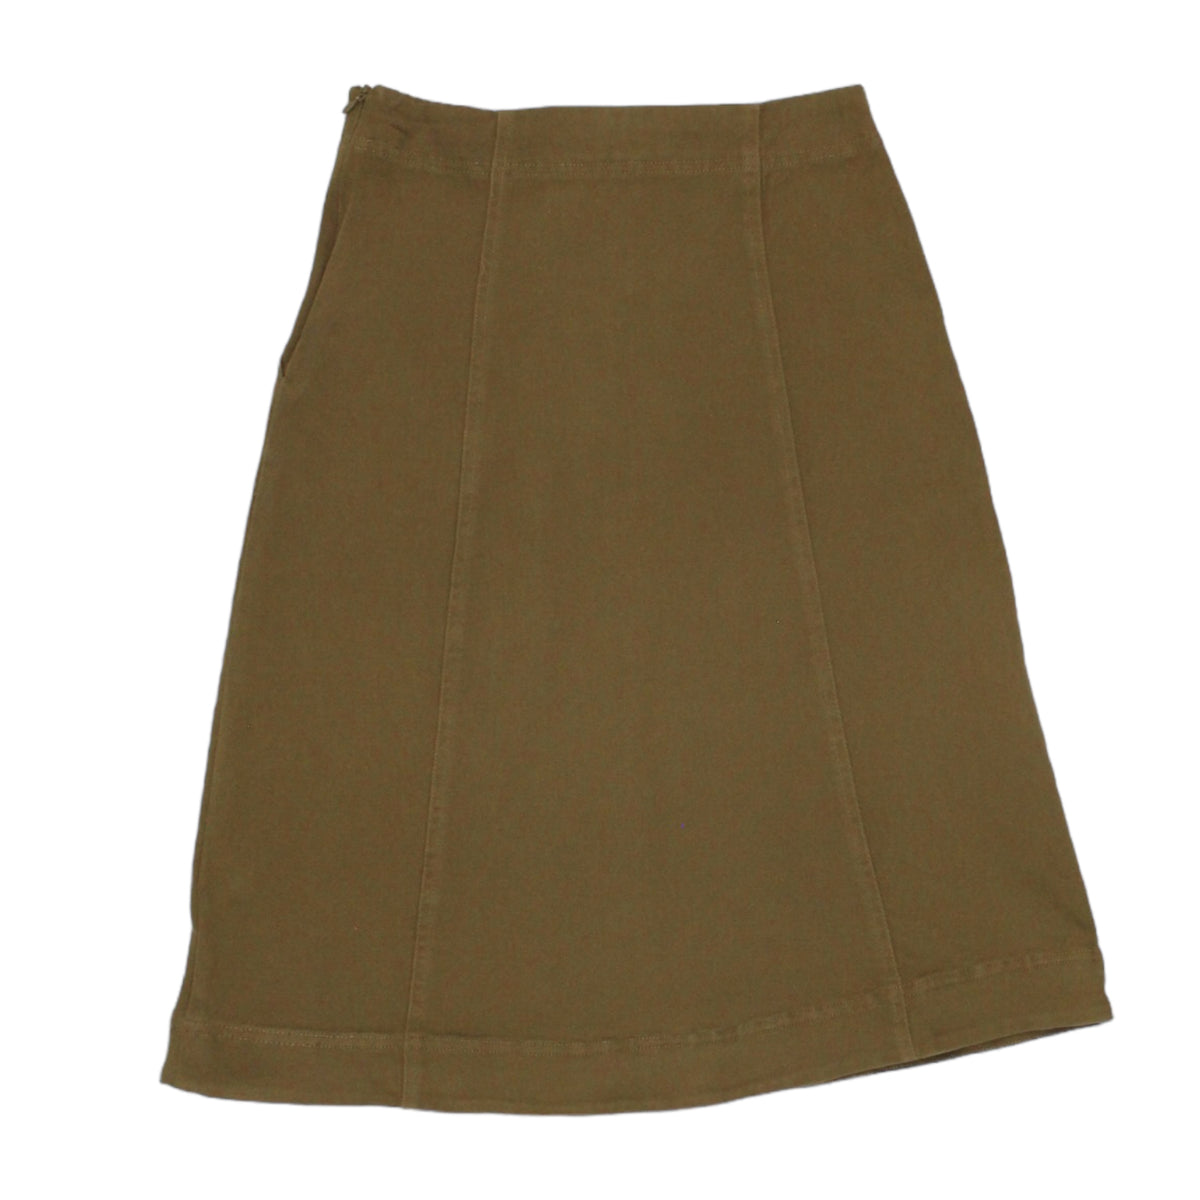 Seasalt Brown Cargo Style Skirt - Seconds